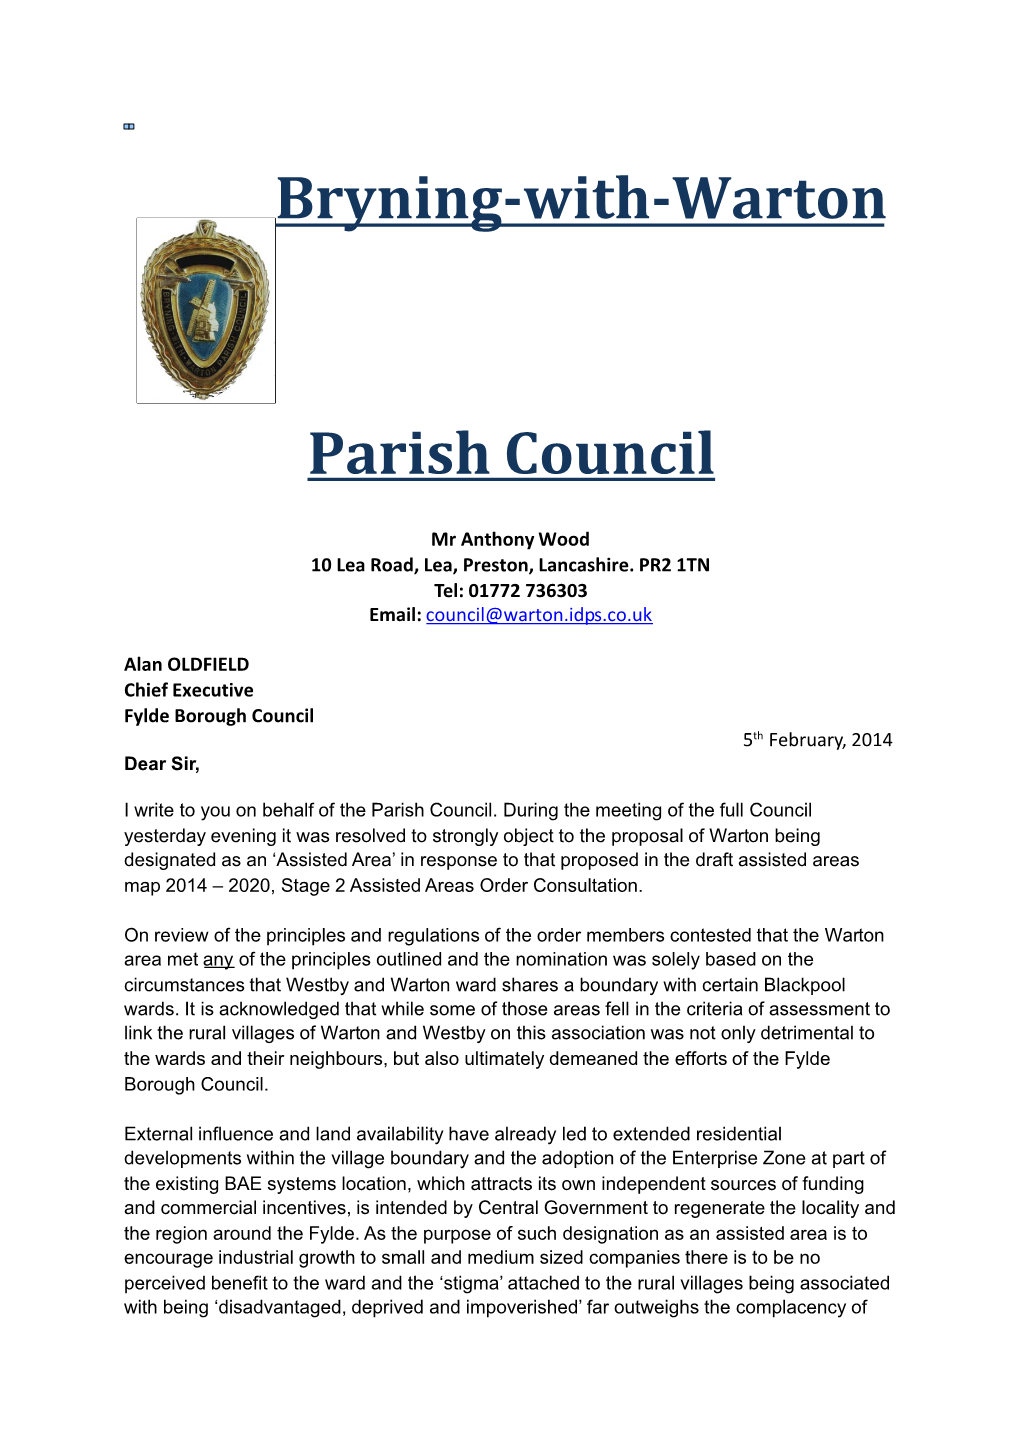 Bryning-With-Warton Parish Council